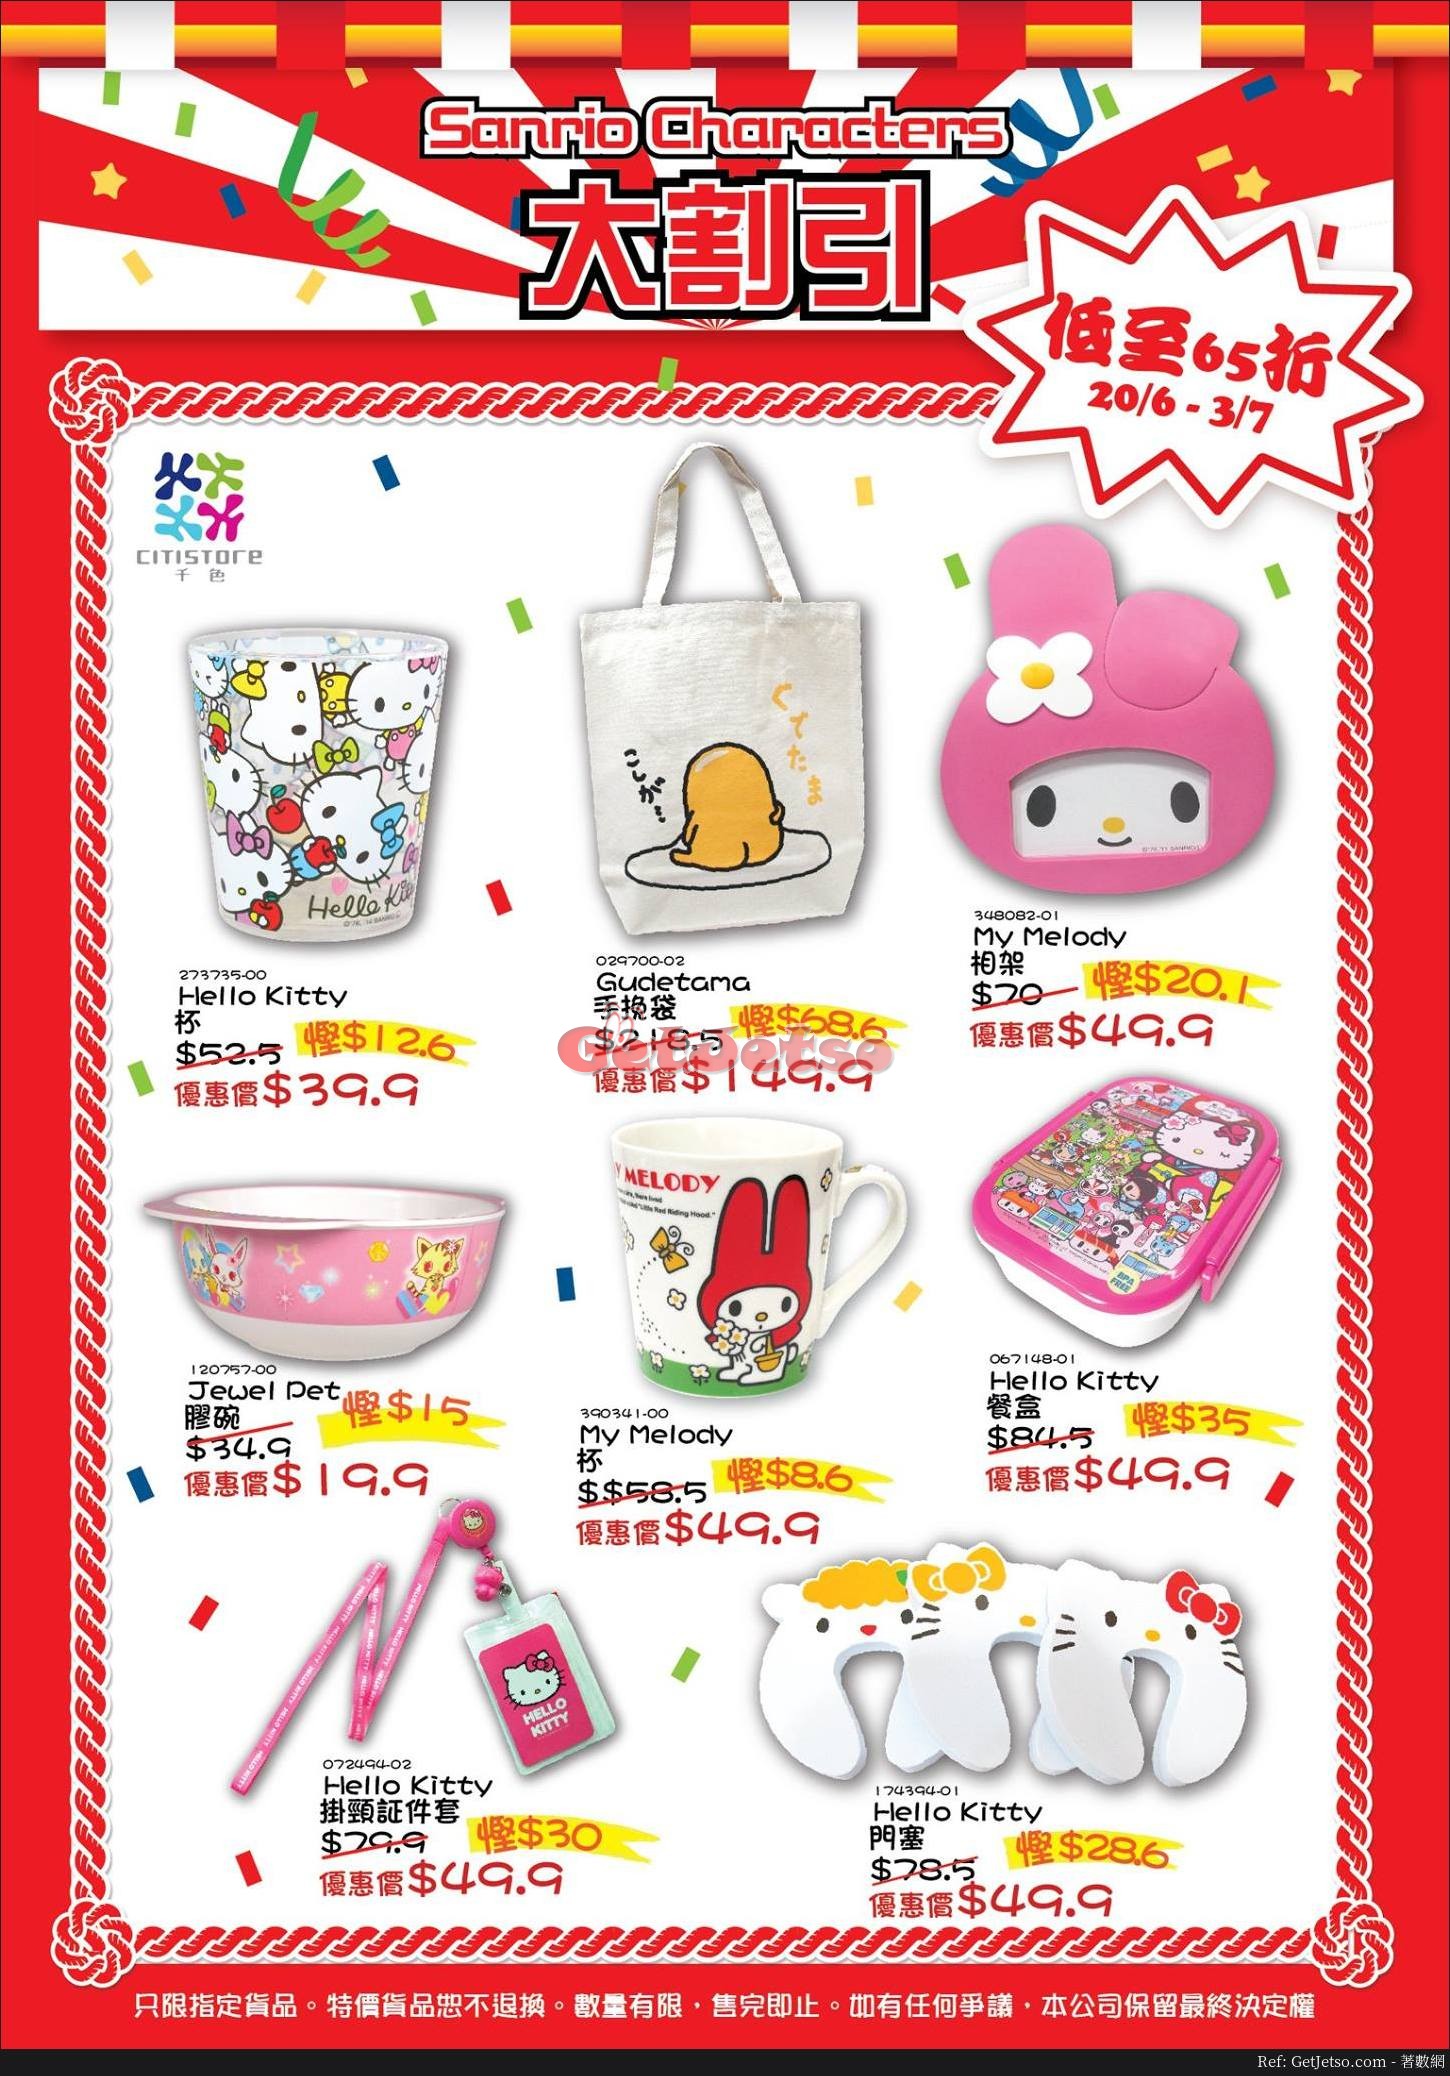 Sanrio Characters 低至65折減價優惠@千色店(至17年7月3日)圖片1